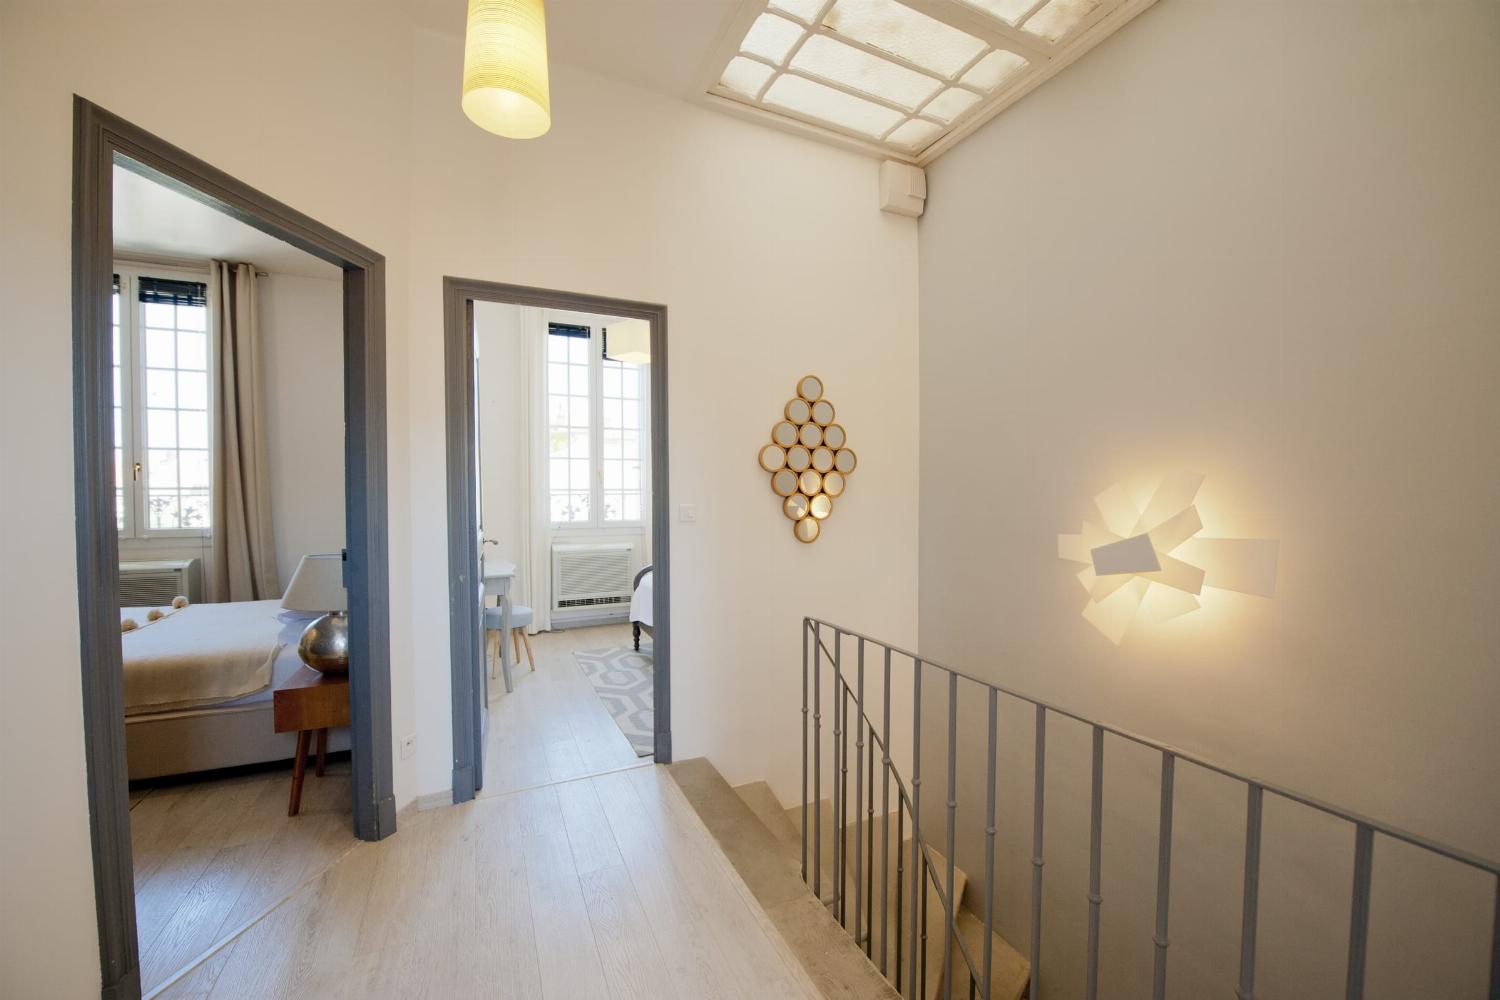 1st floor hallway | Rental home in South of France